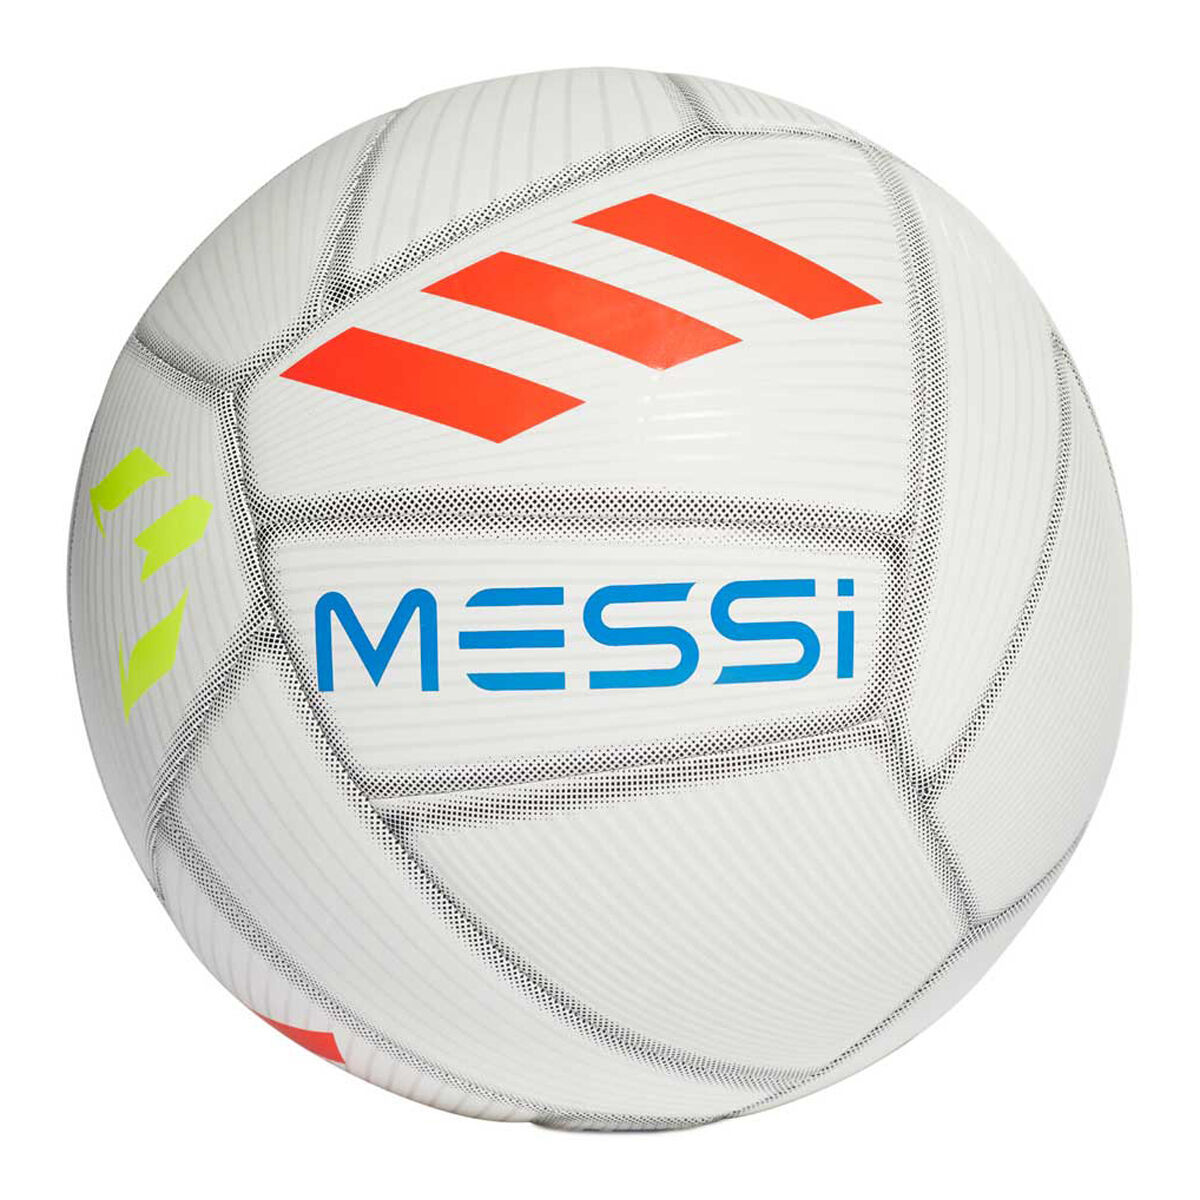 adidas messi soccer ball